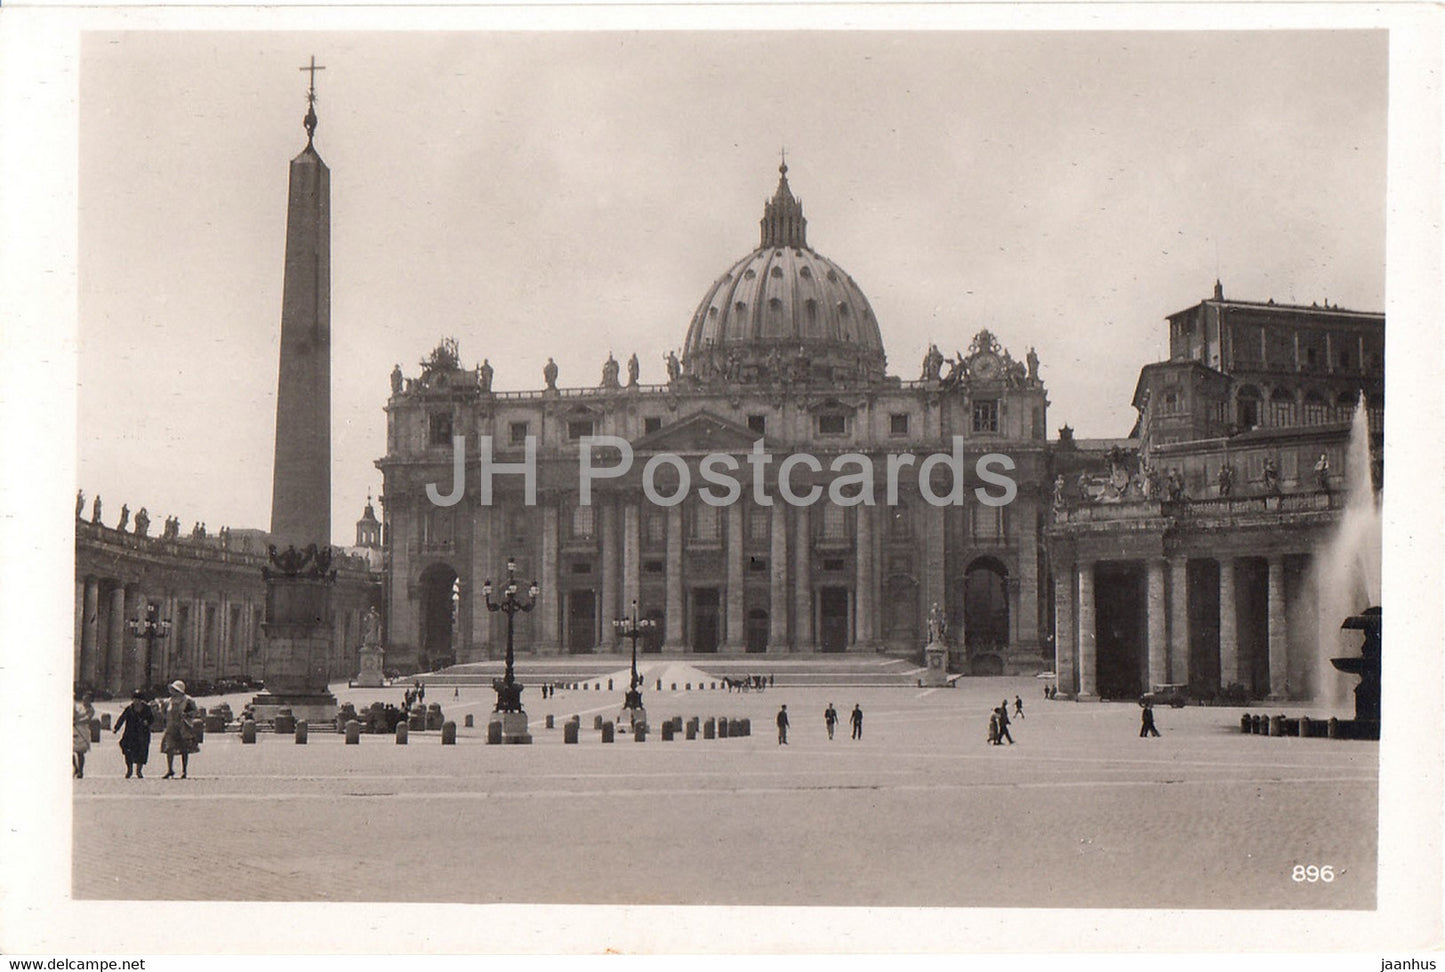 Roma - Rome - S Pietro - St Peter - 896 - old postcard - Italy - unused - JH Postcards